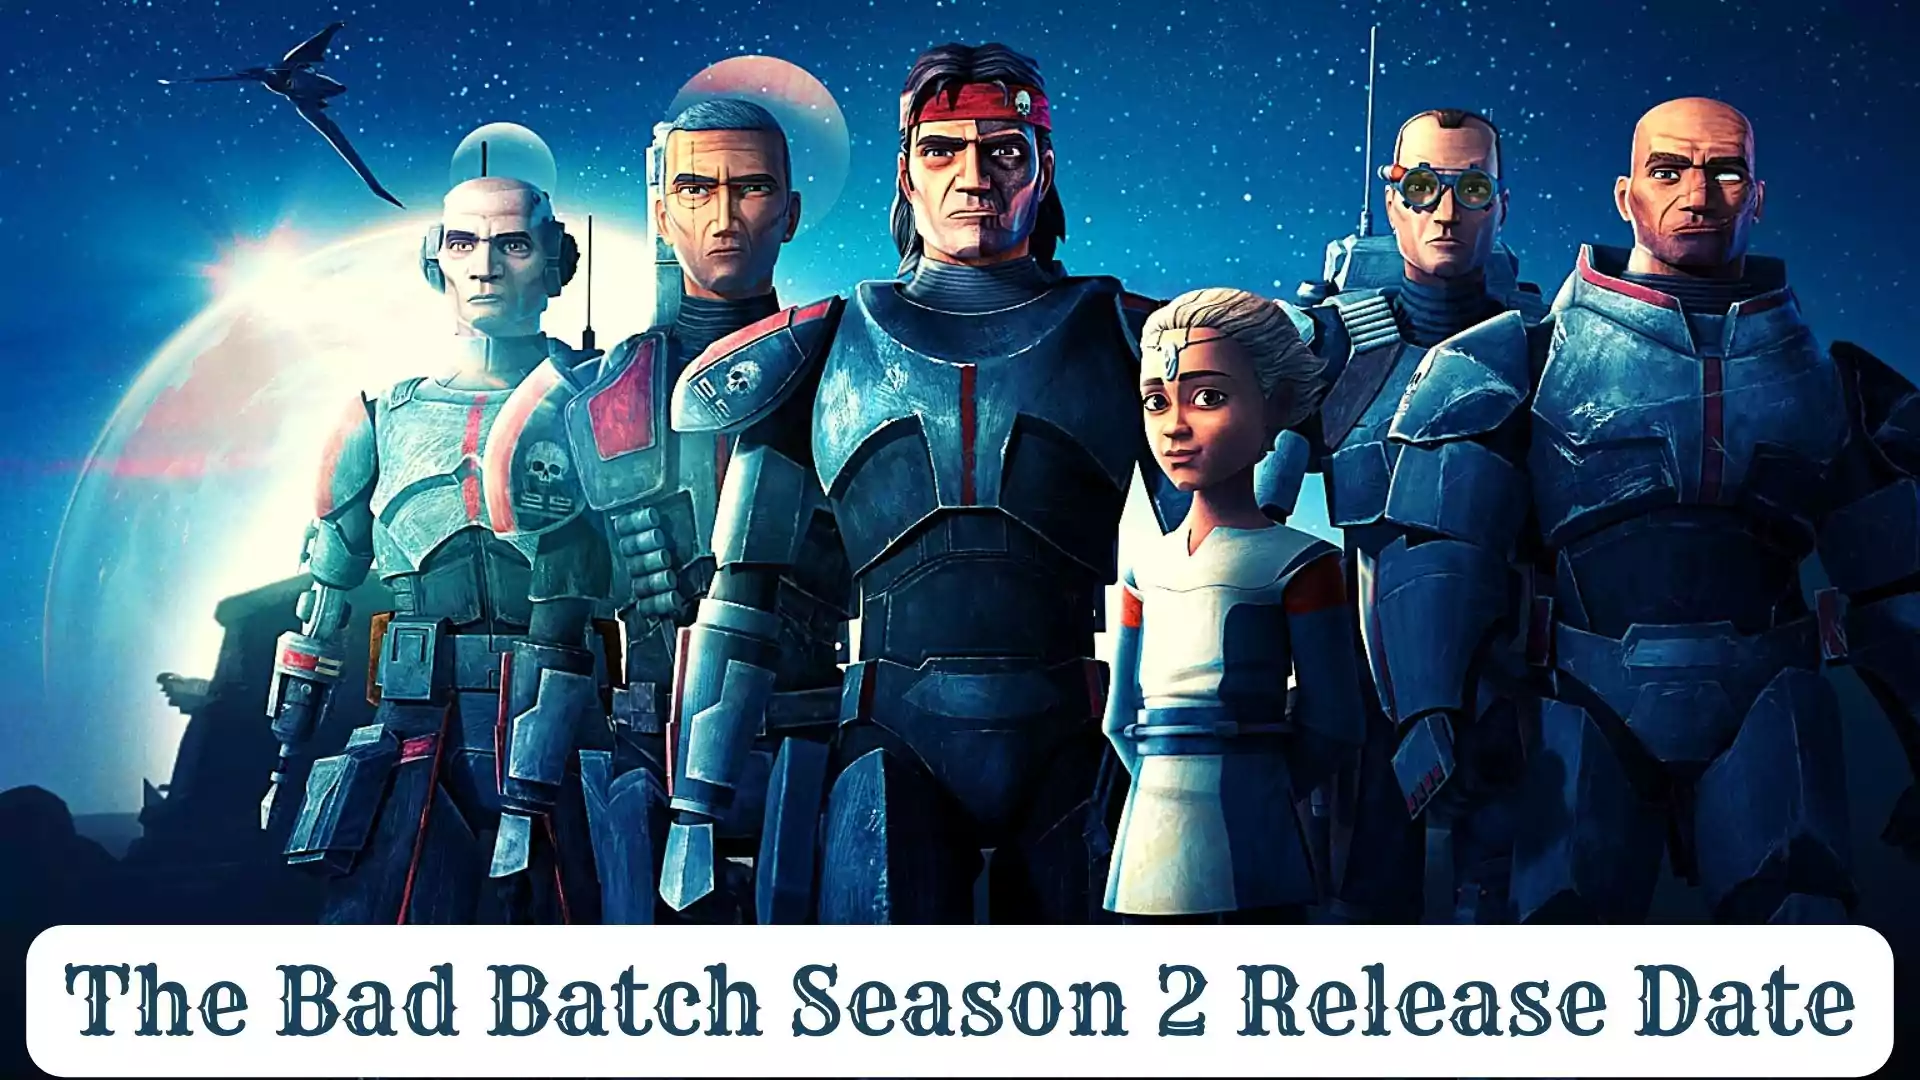 The Bad Batch Season 2 Release Date